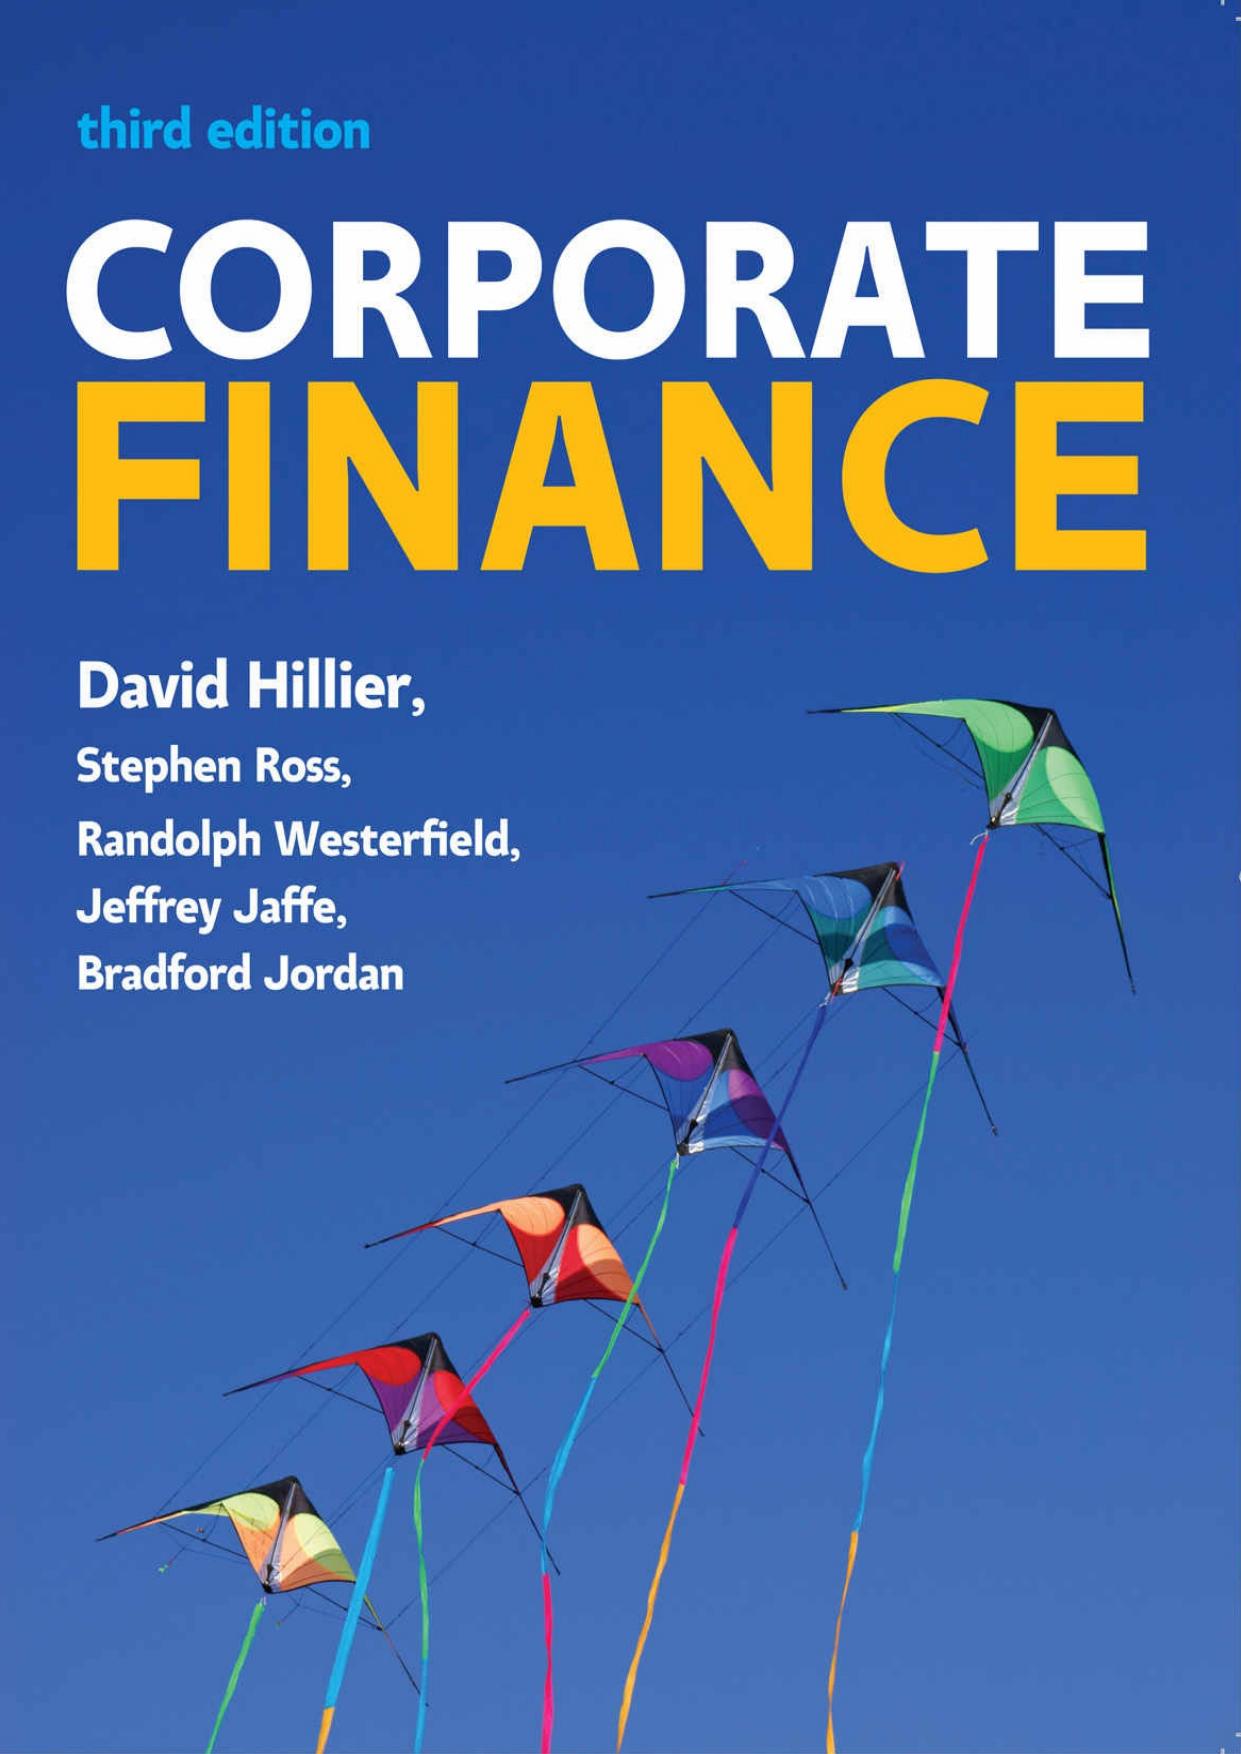 Corporate Finance European Edition 3rd Edition by David Hillier - Hillier, David.jpg